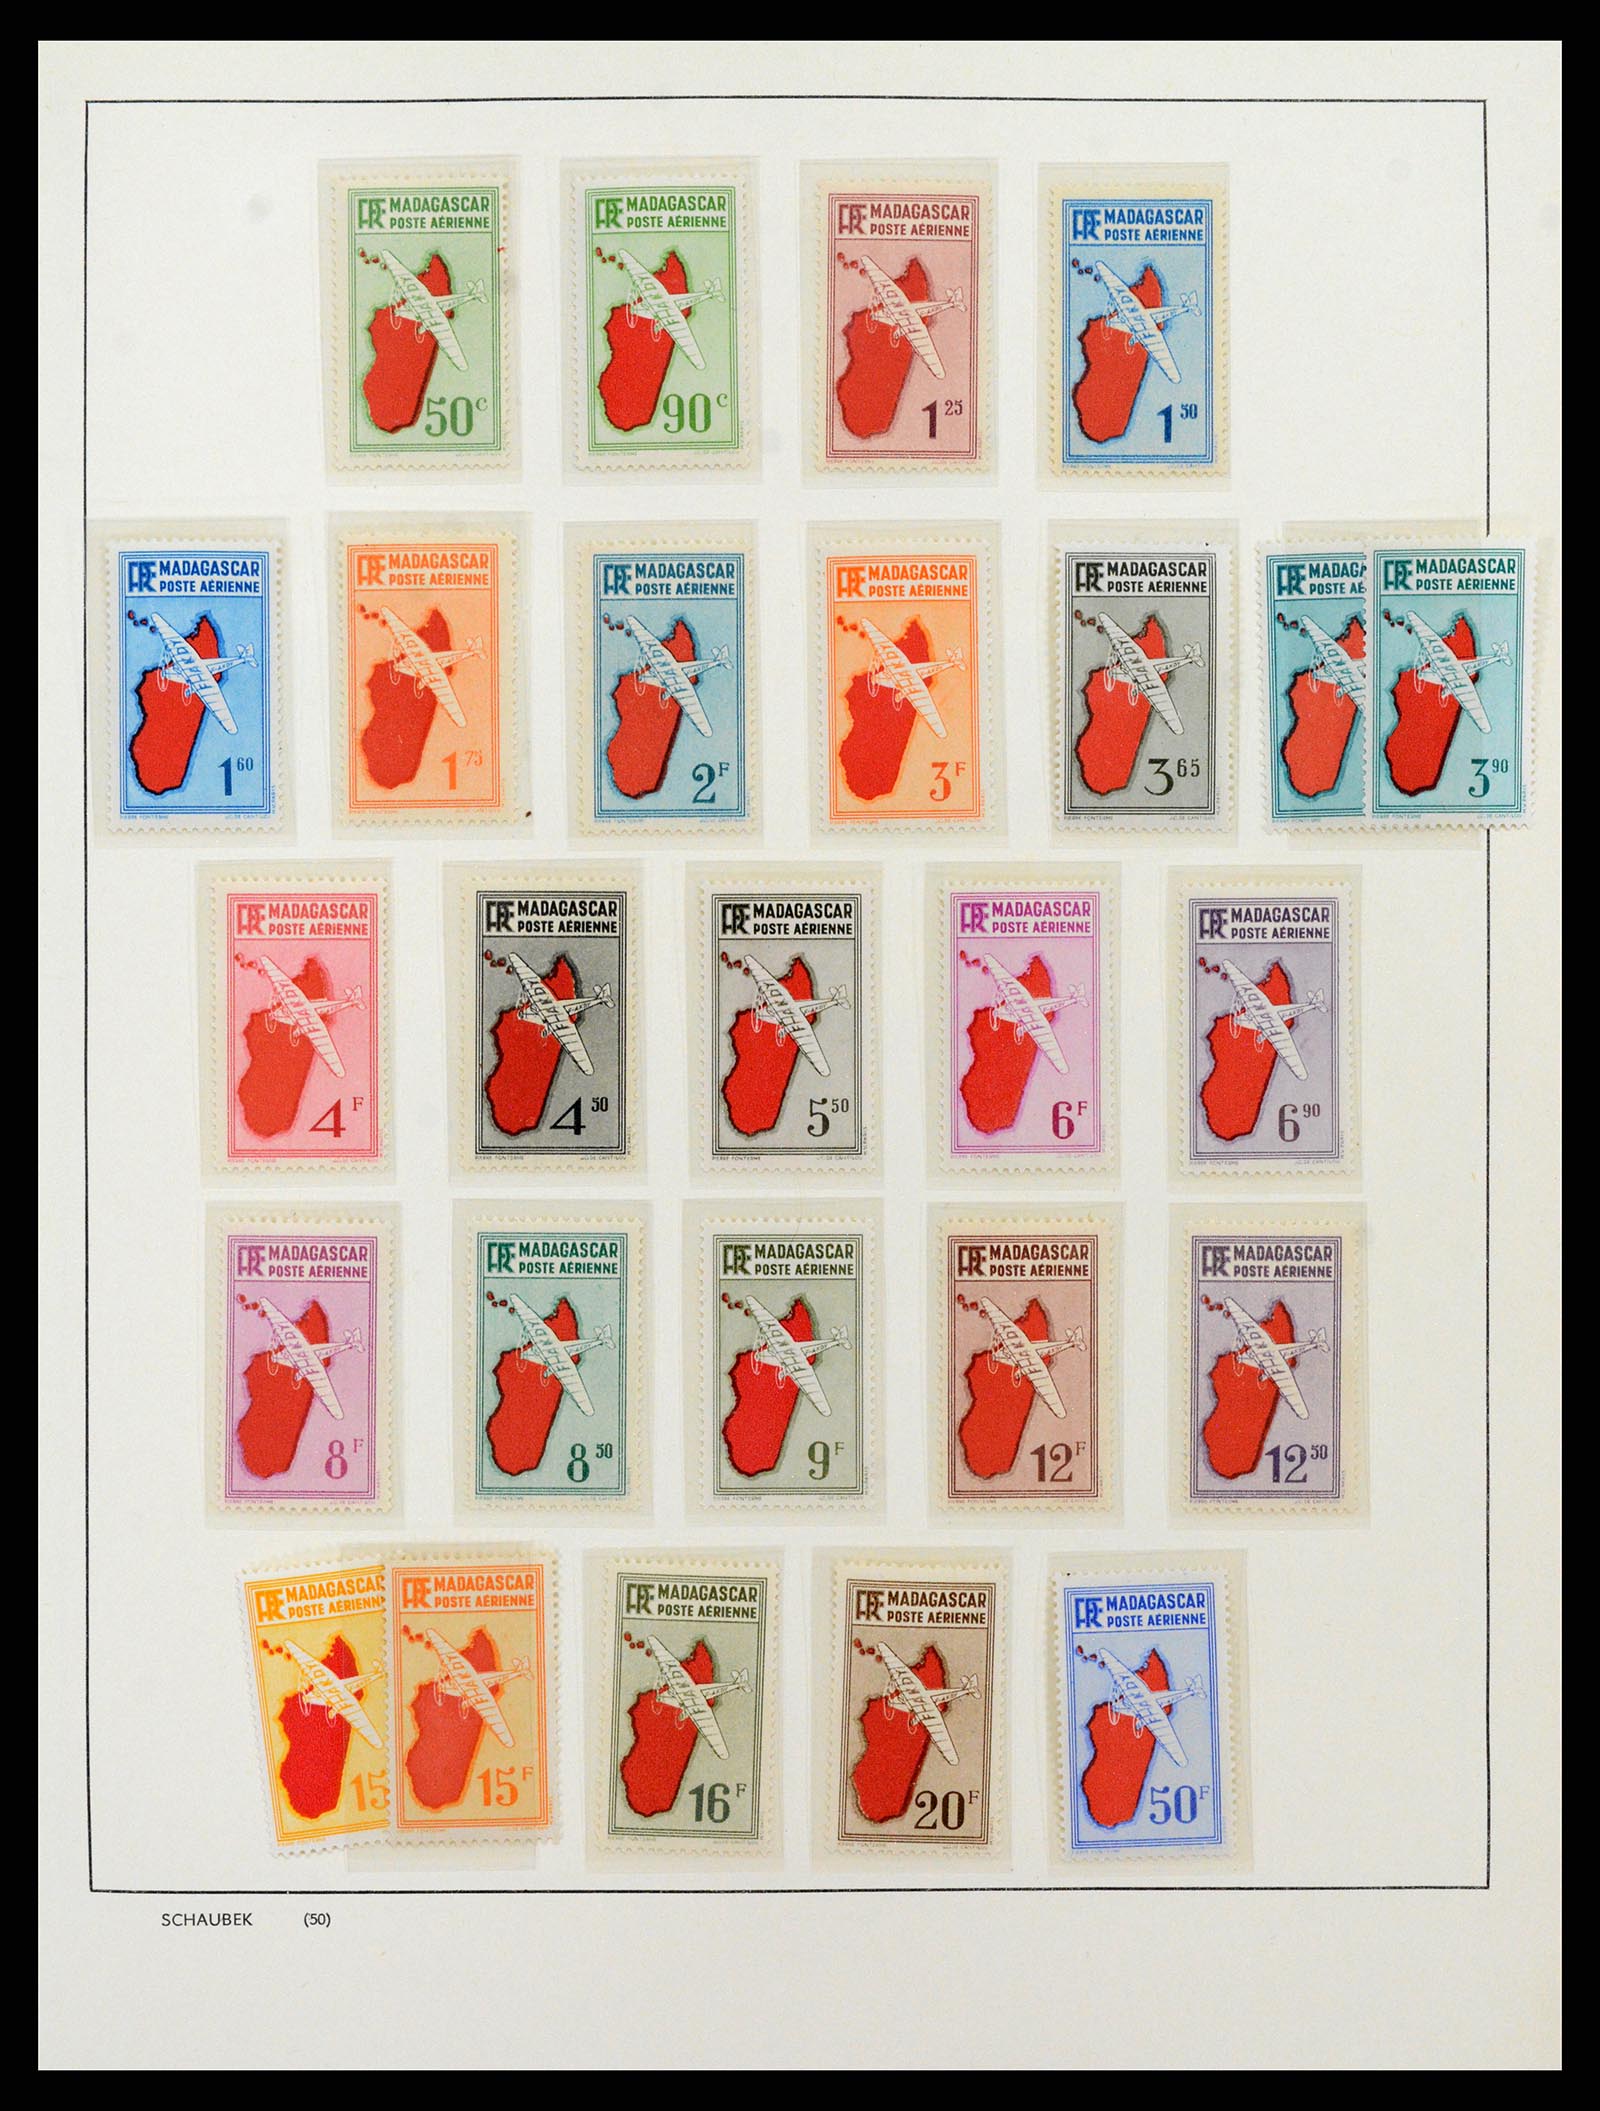 37929 072 - Stamp Collection 37929 Madagascar 1889-2000.